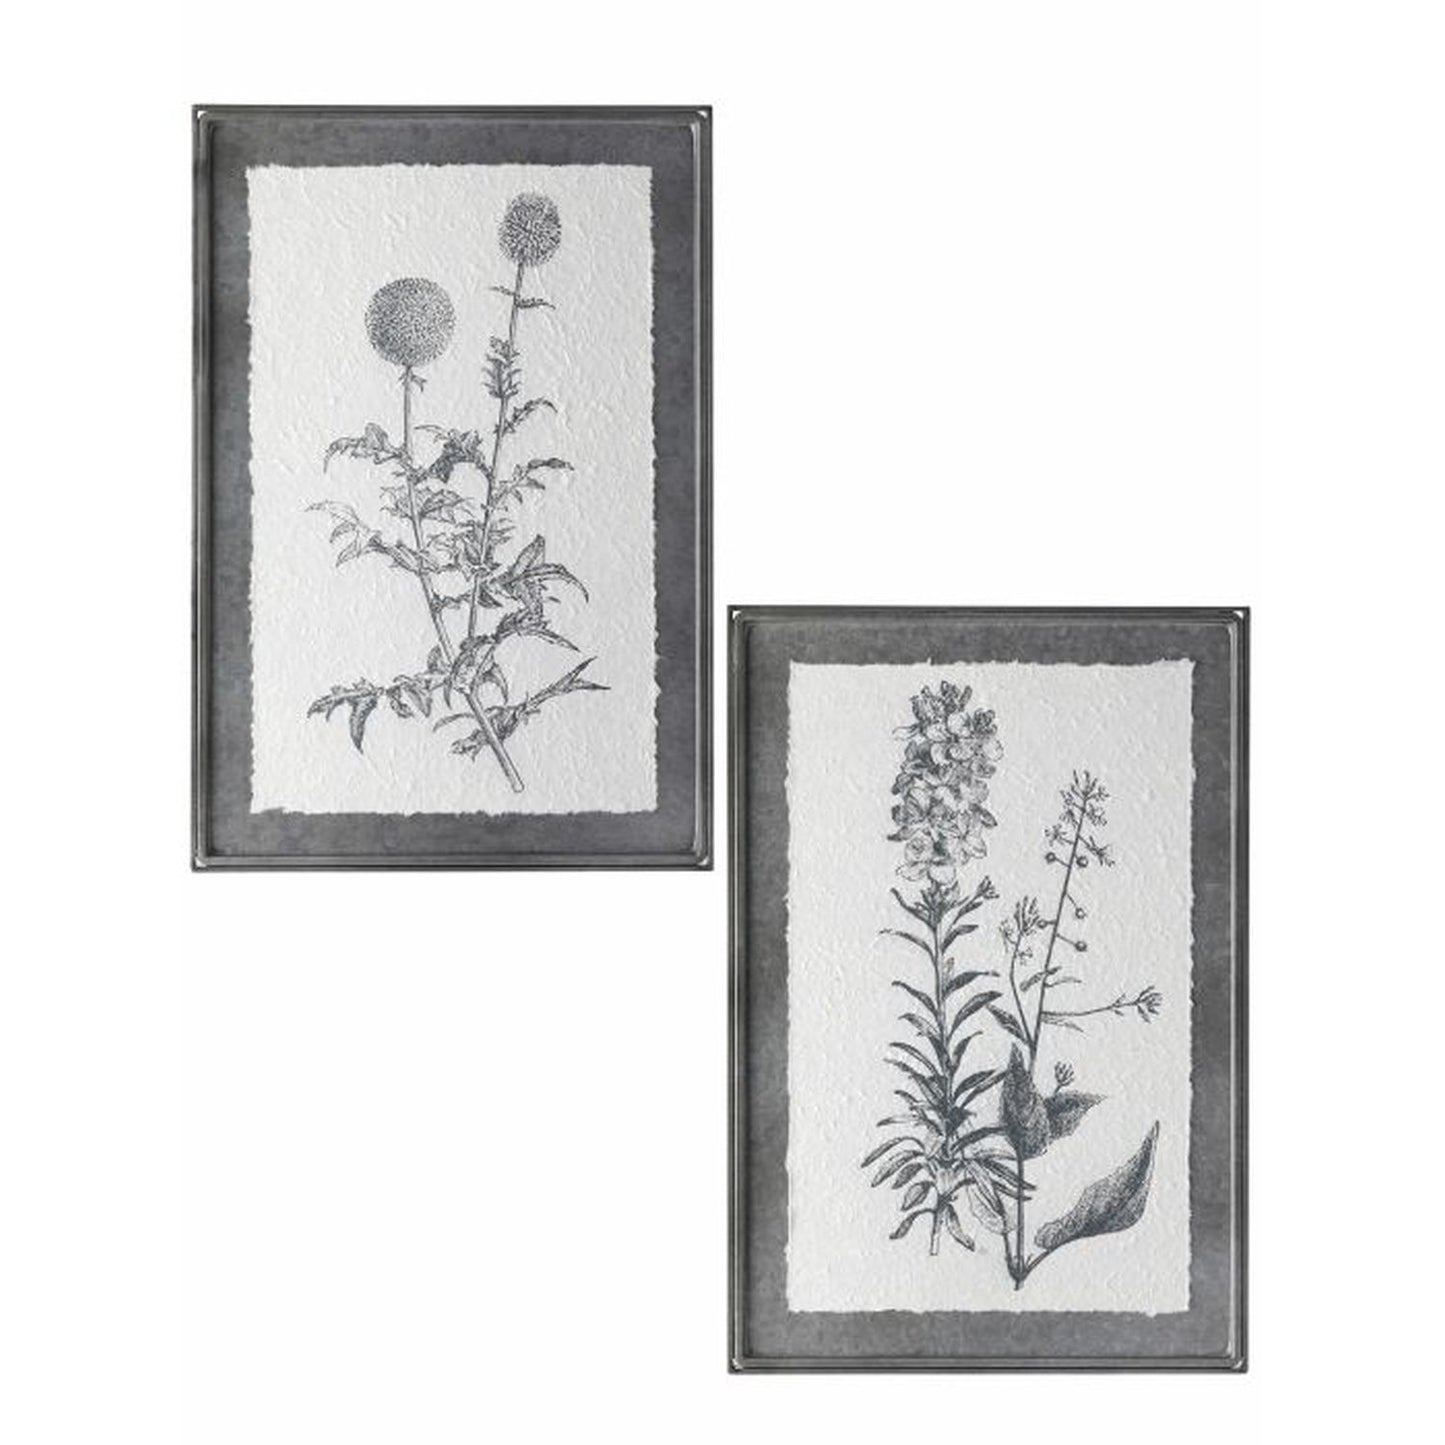 Regency International Metal Wild Flower Print 16.75X24.5", Set Of 2, Assortment